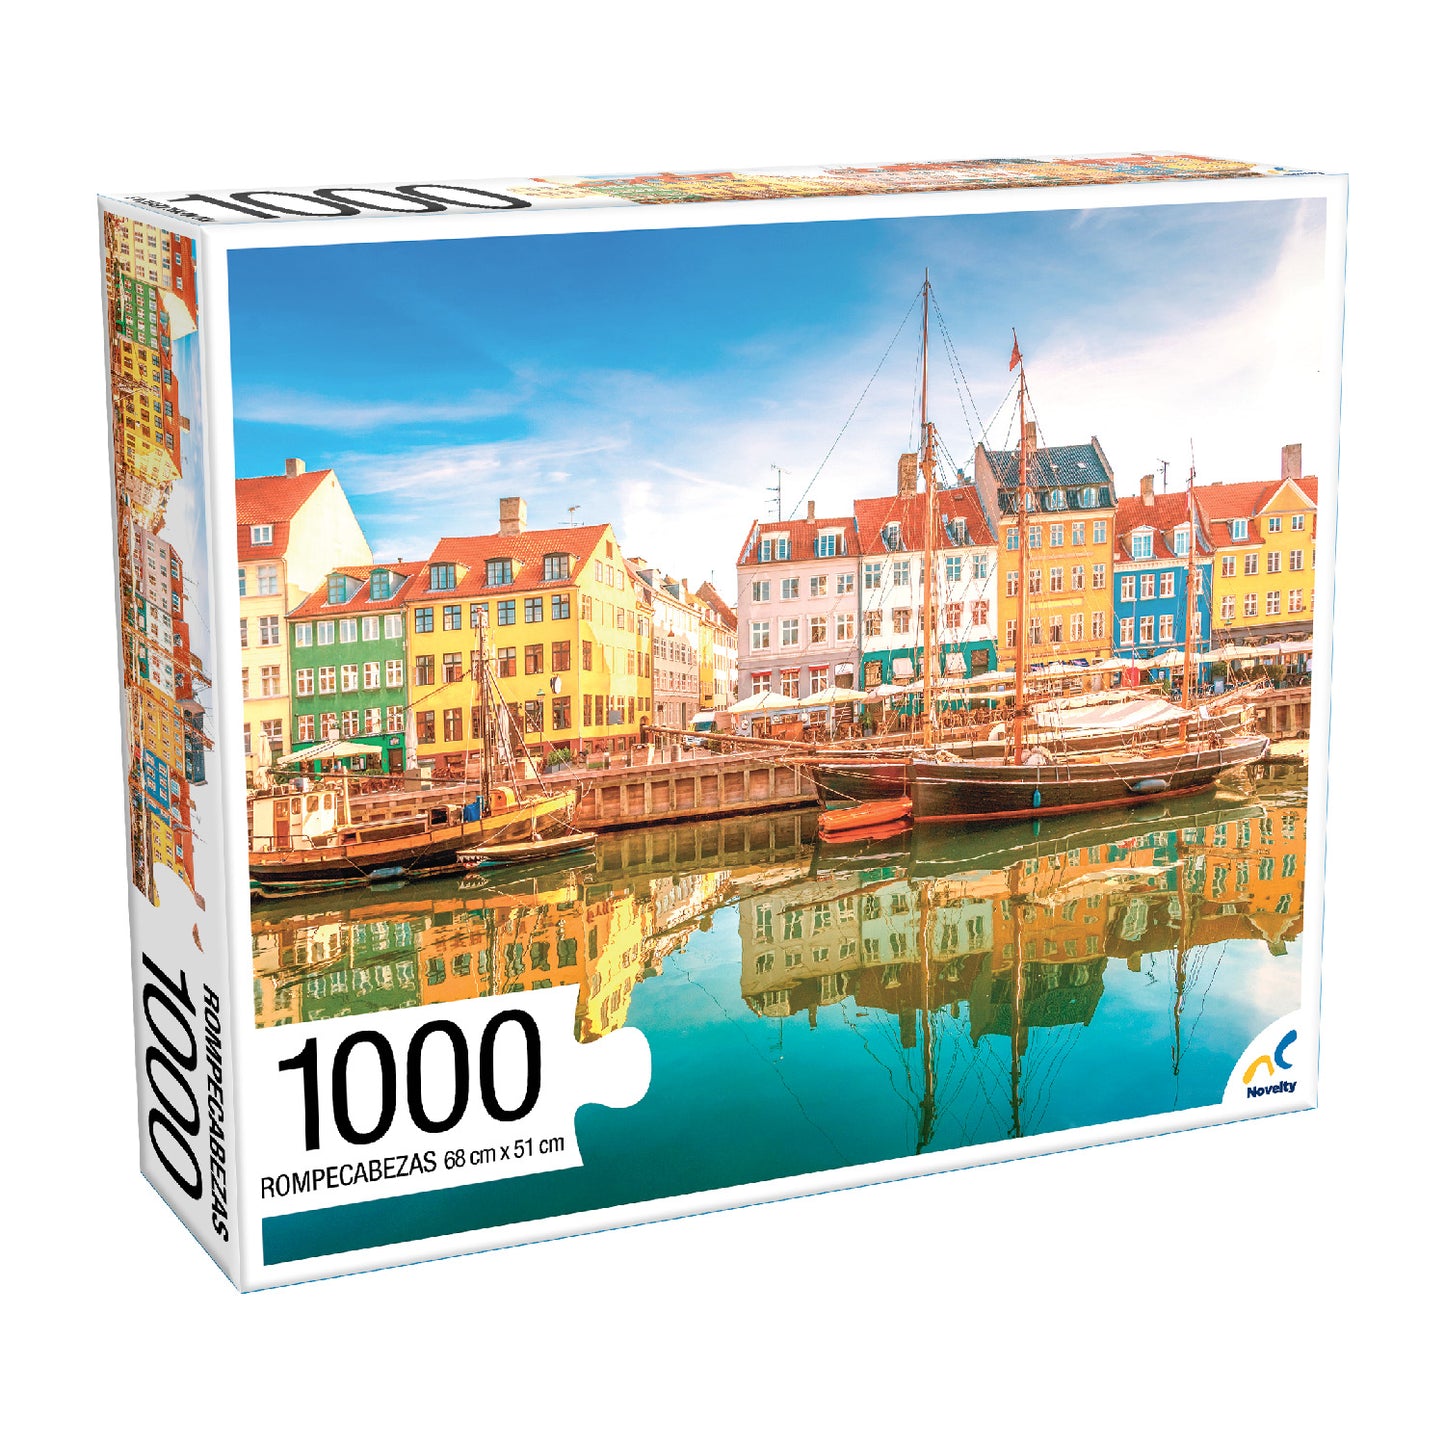 Rompecabezas Copenhague 1000 piezas